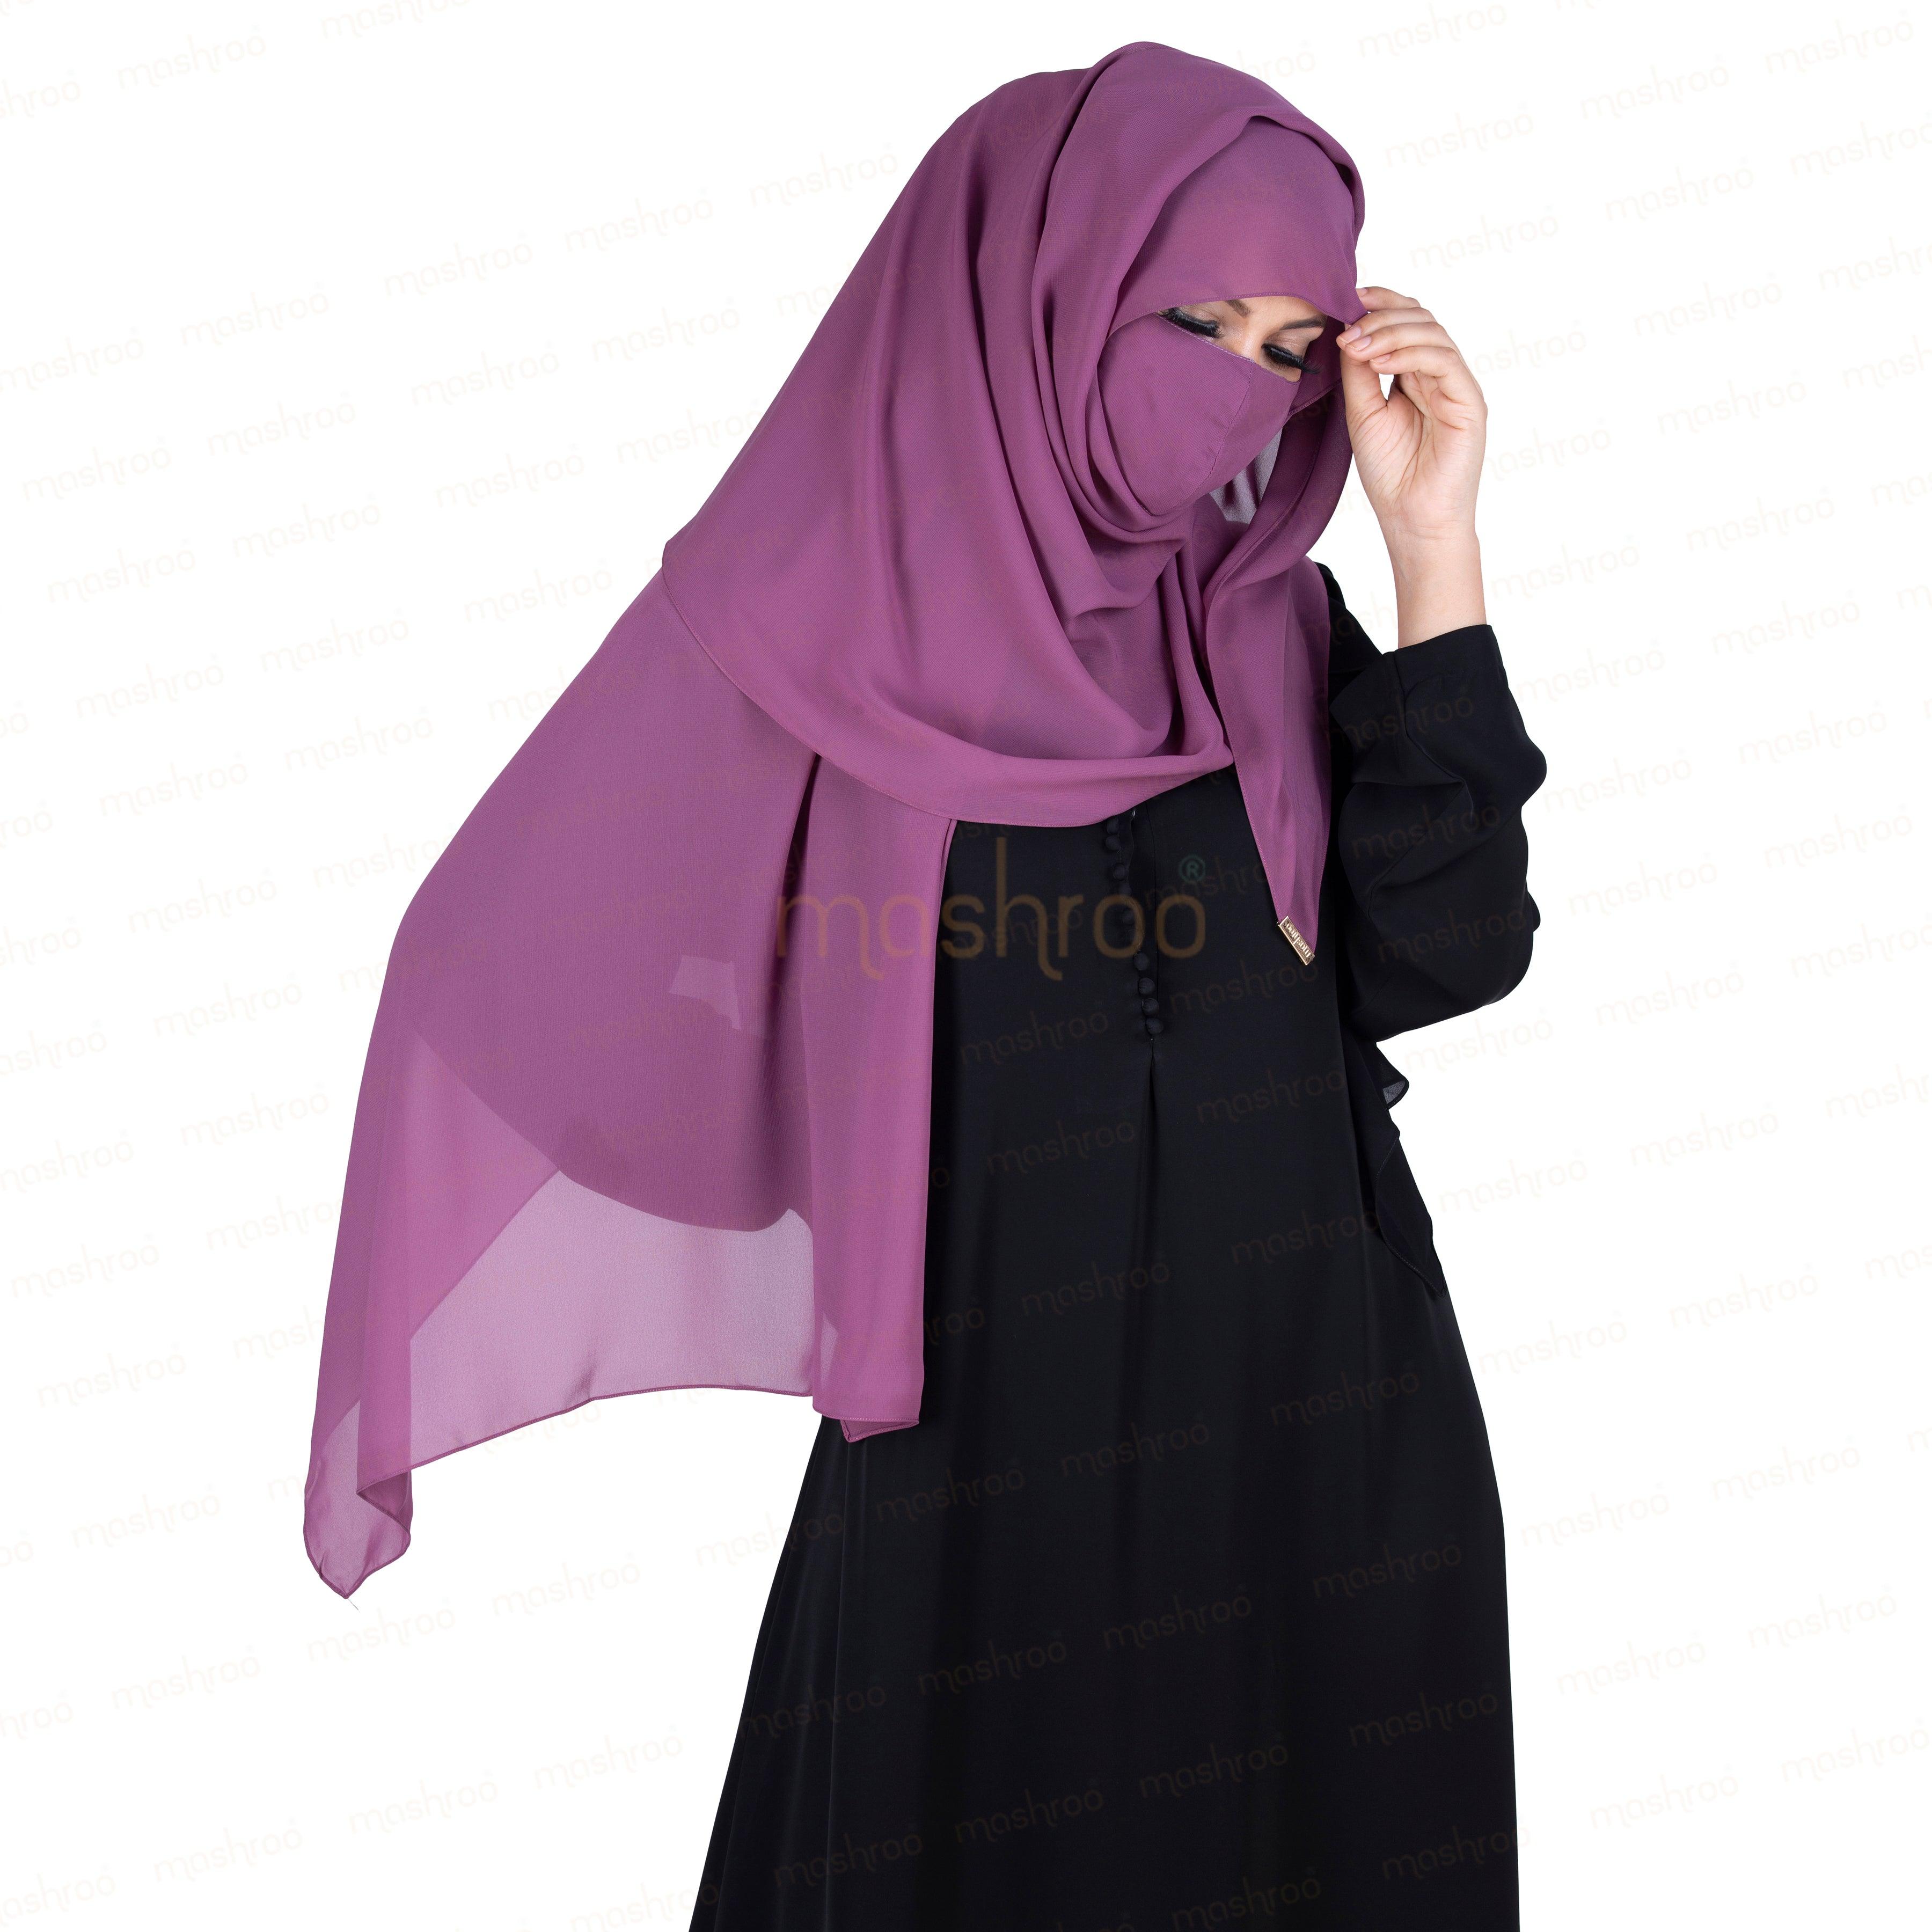 Lavender Mashroo Macaron Scarf | Hijab #23 - Mashroo